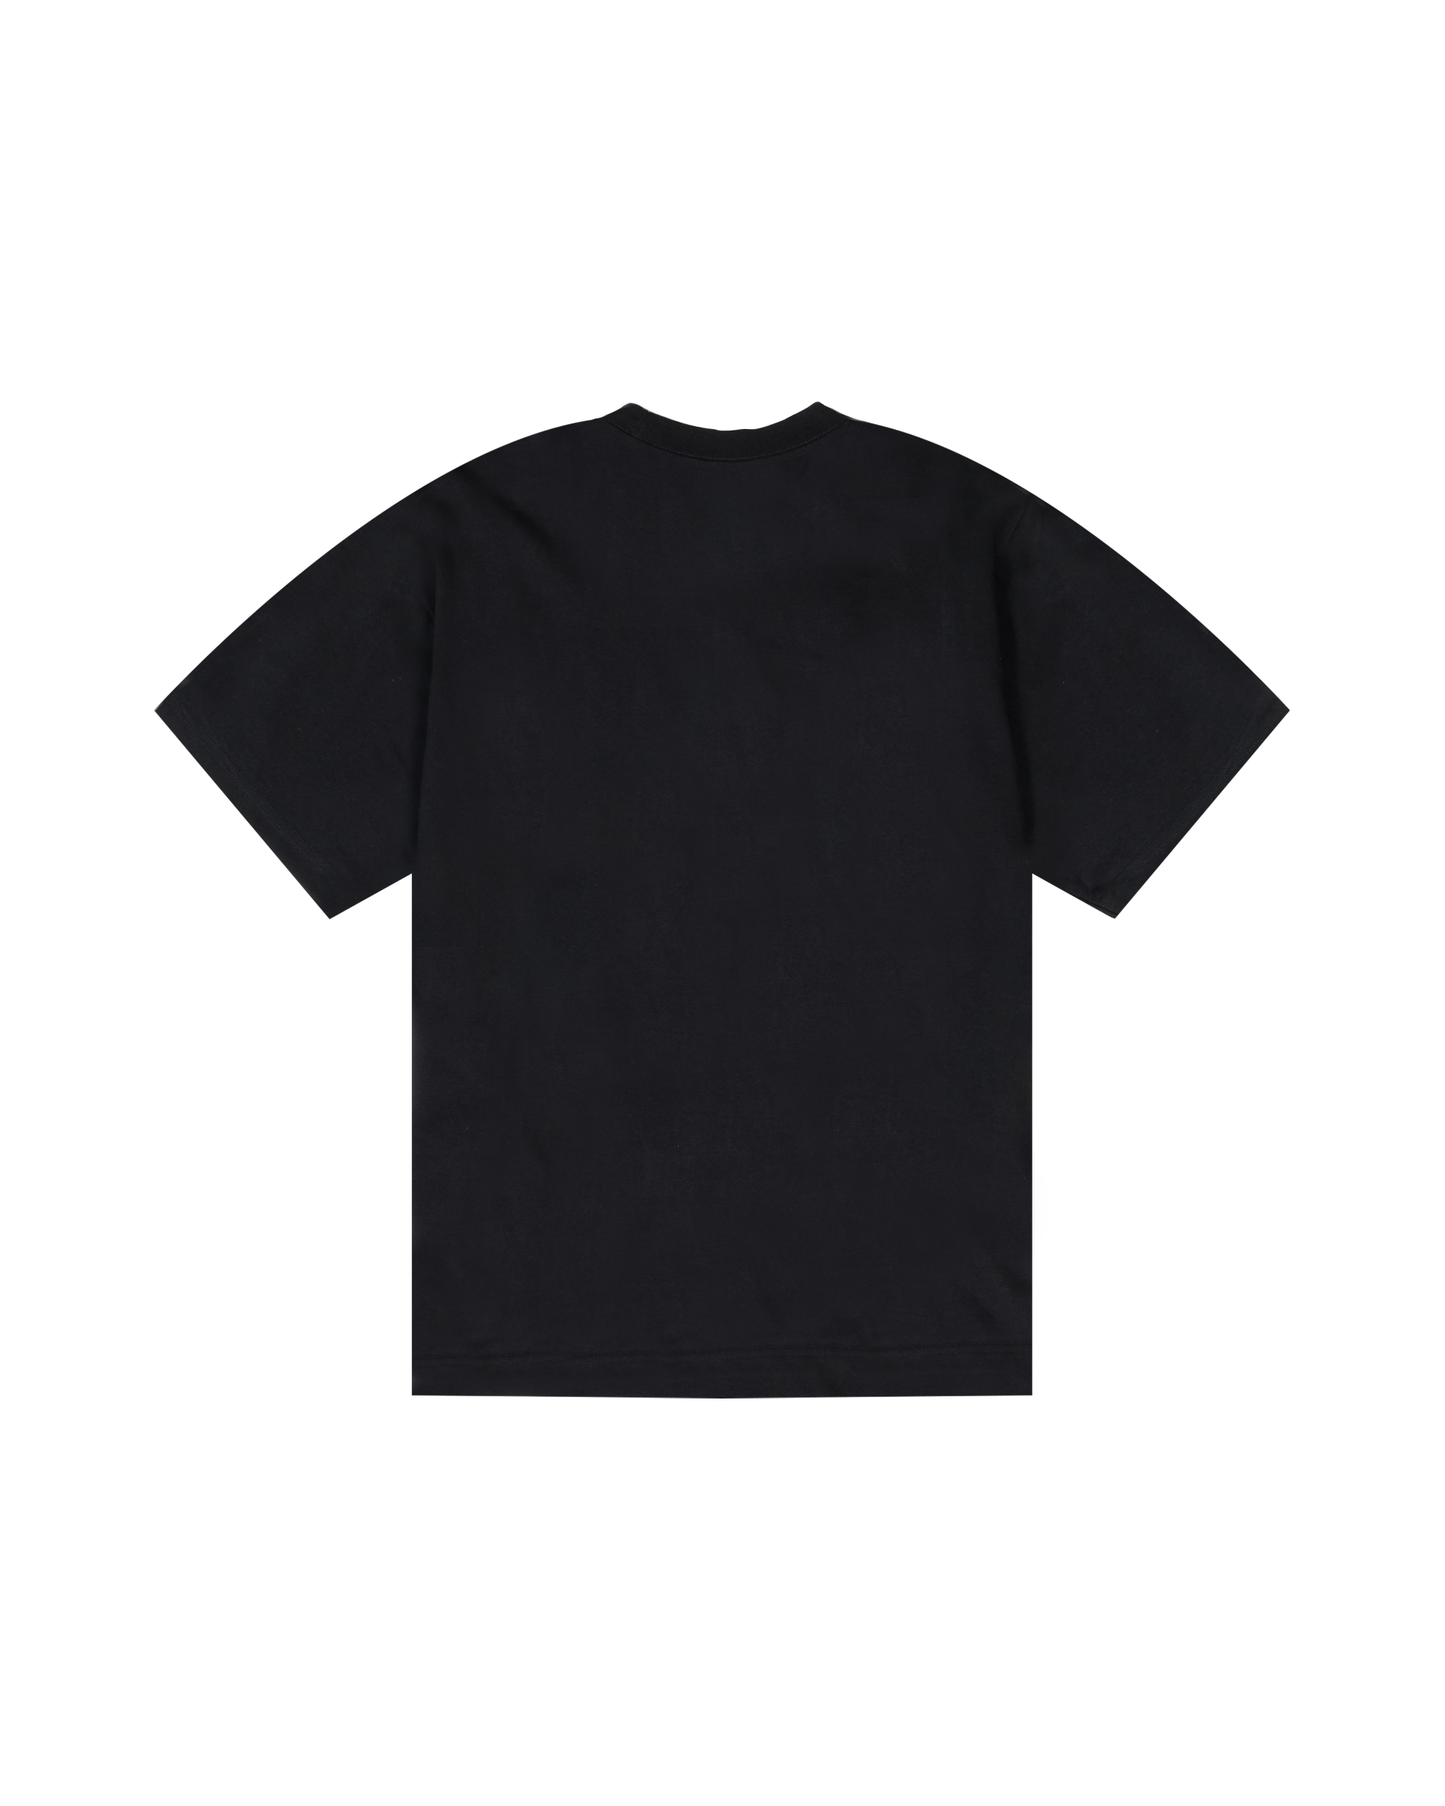 Splat T-Shirt - Black